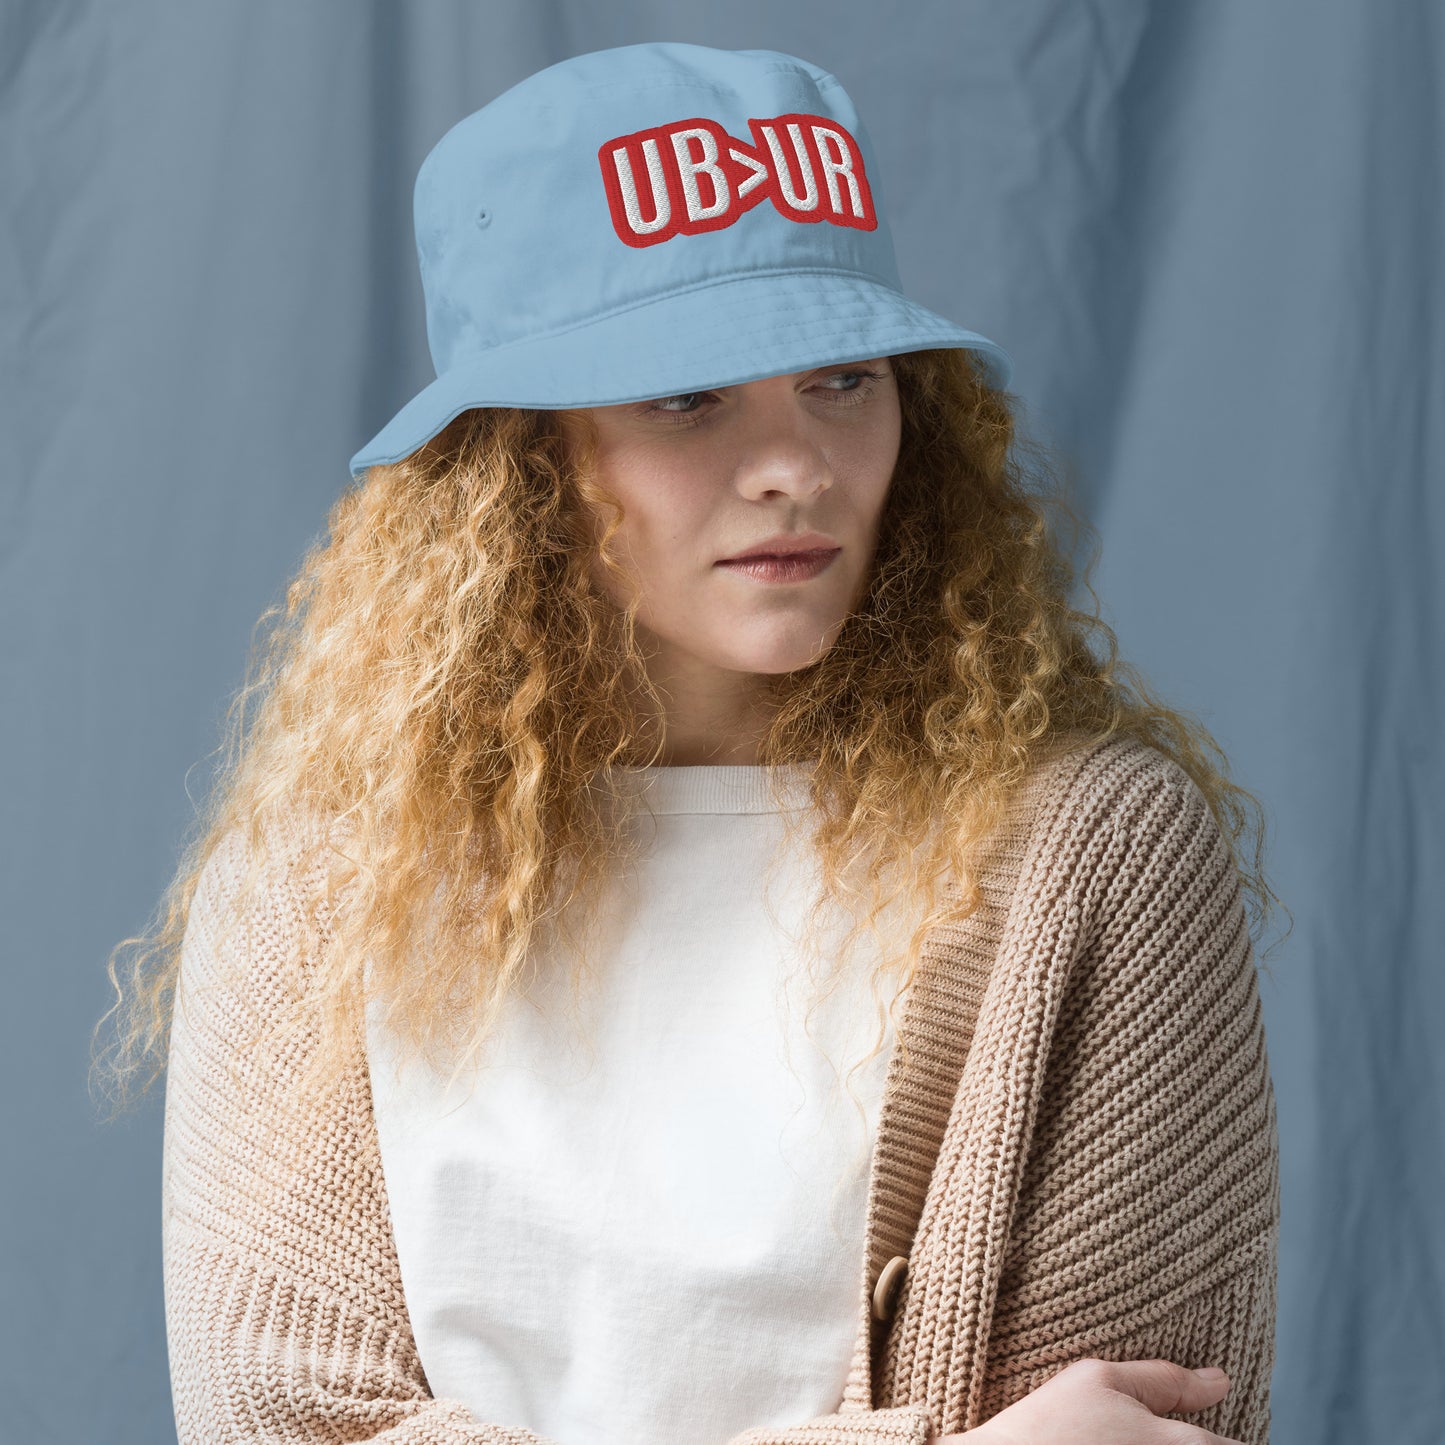 UB>UR-Organic bucket hat